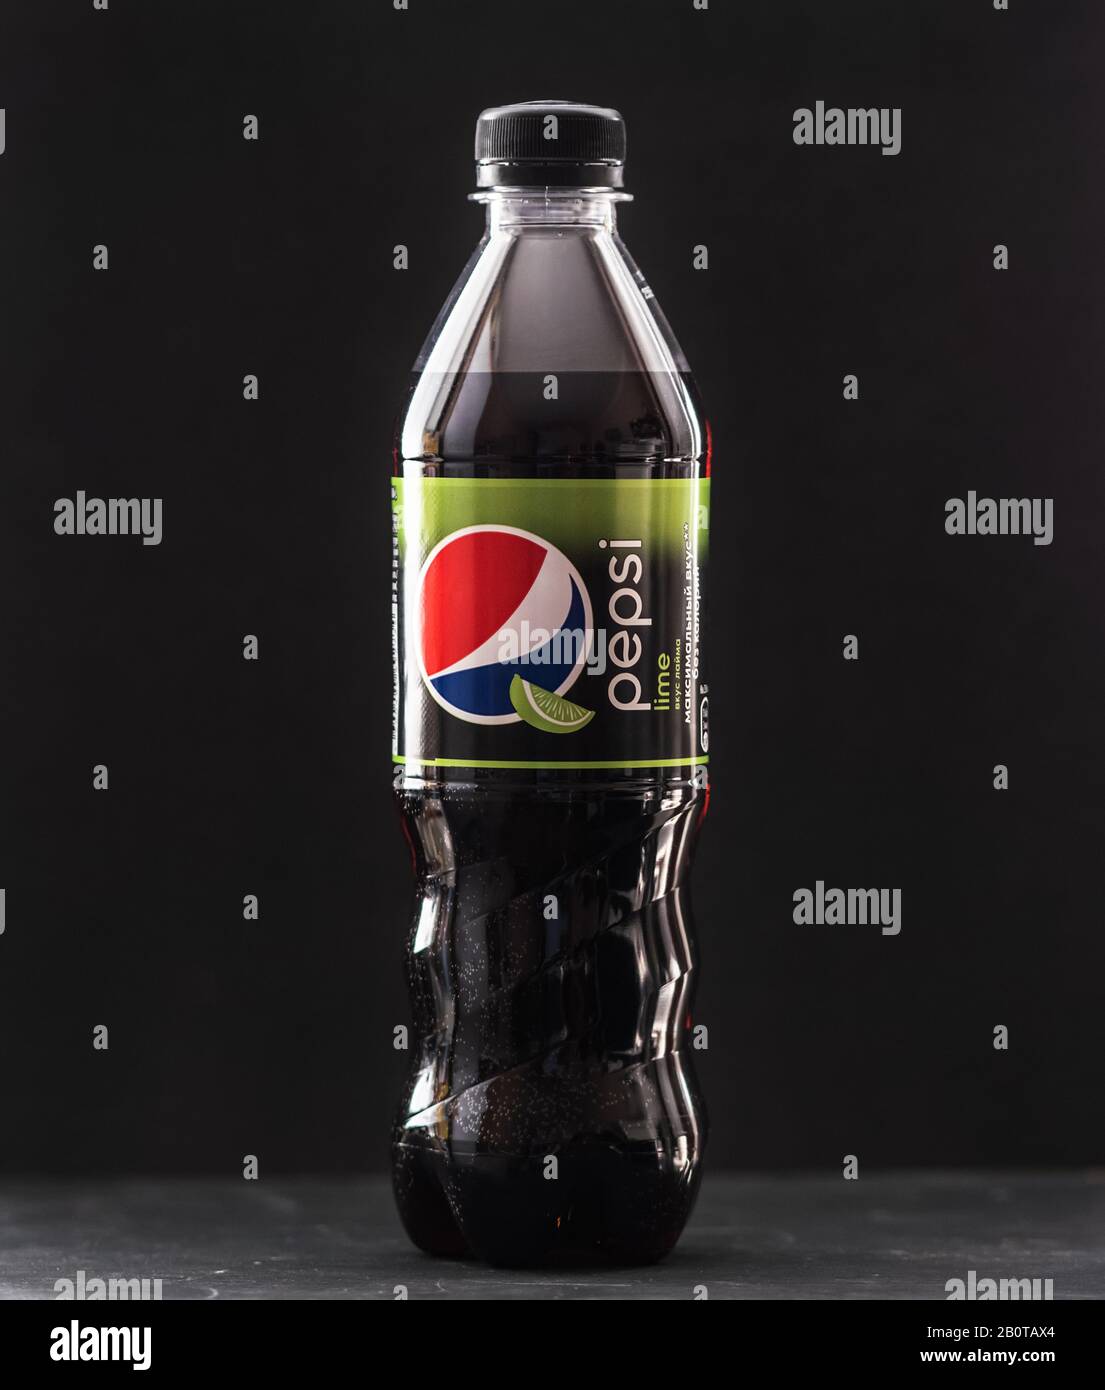 VLADIVOSTOK, RUSSIA - FEBRUARY 14, 2020: Bottle of Pepsi Cola Can on dark background. Pepsi produced by PepsiCo. Stock Photo